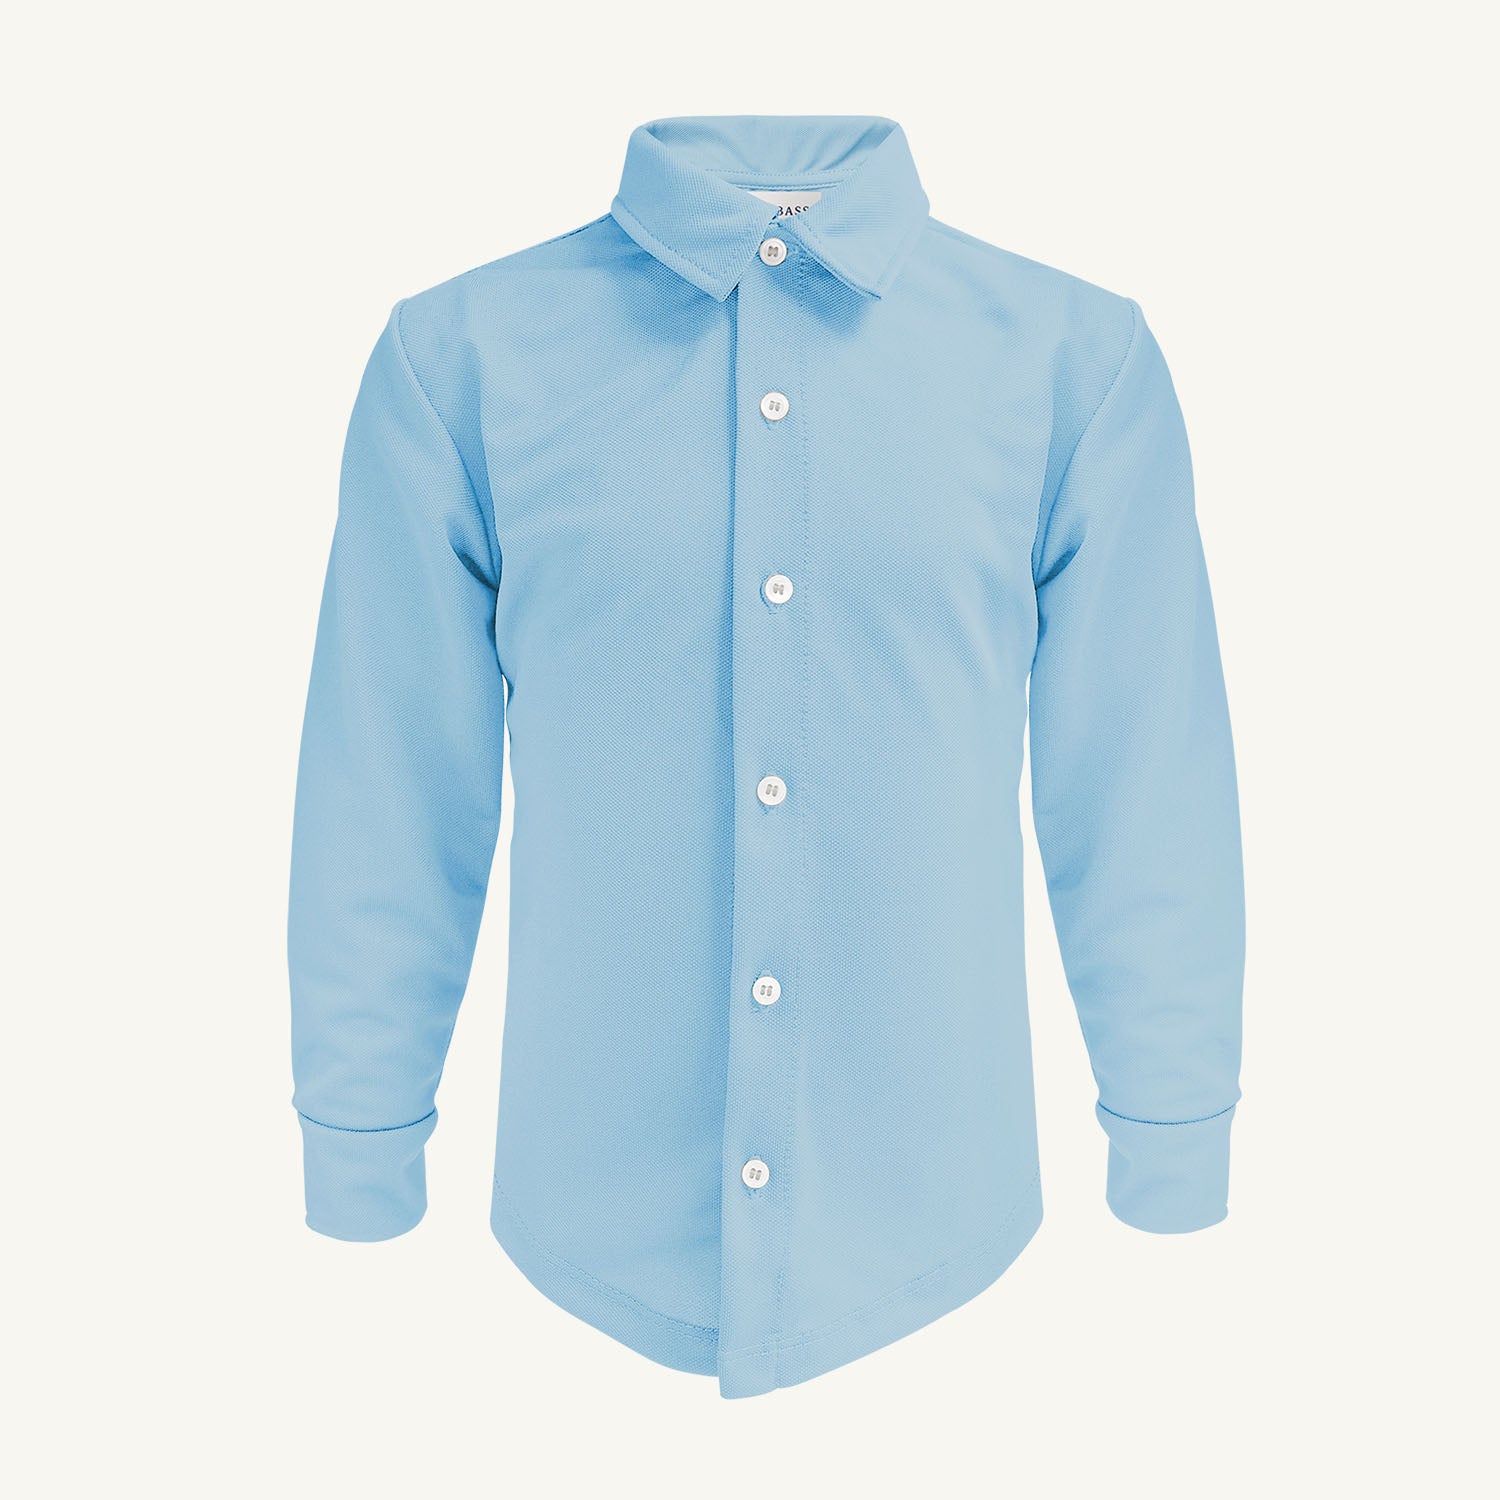 Camisa de hombre con protección solar - azul claro